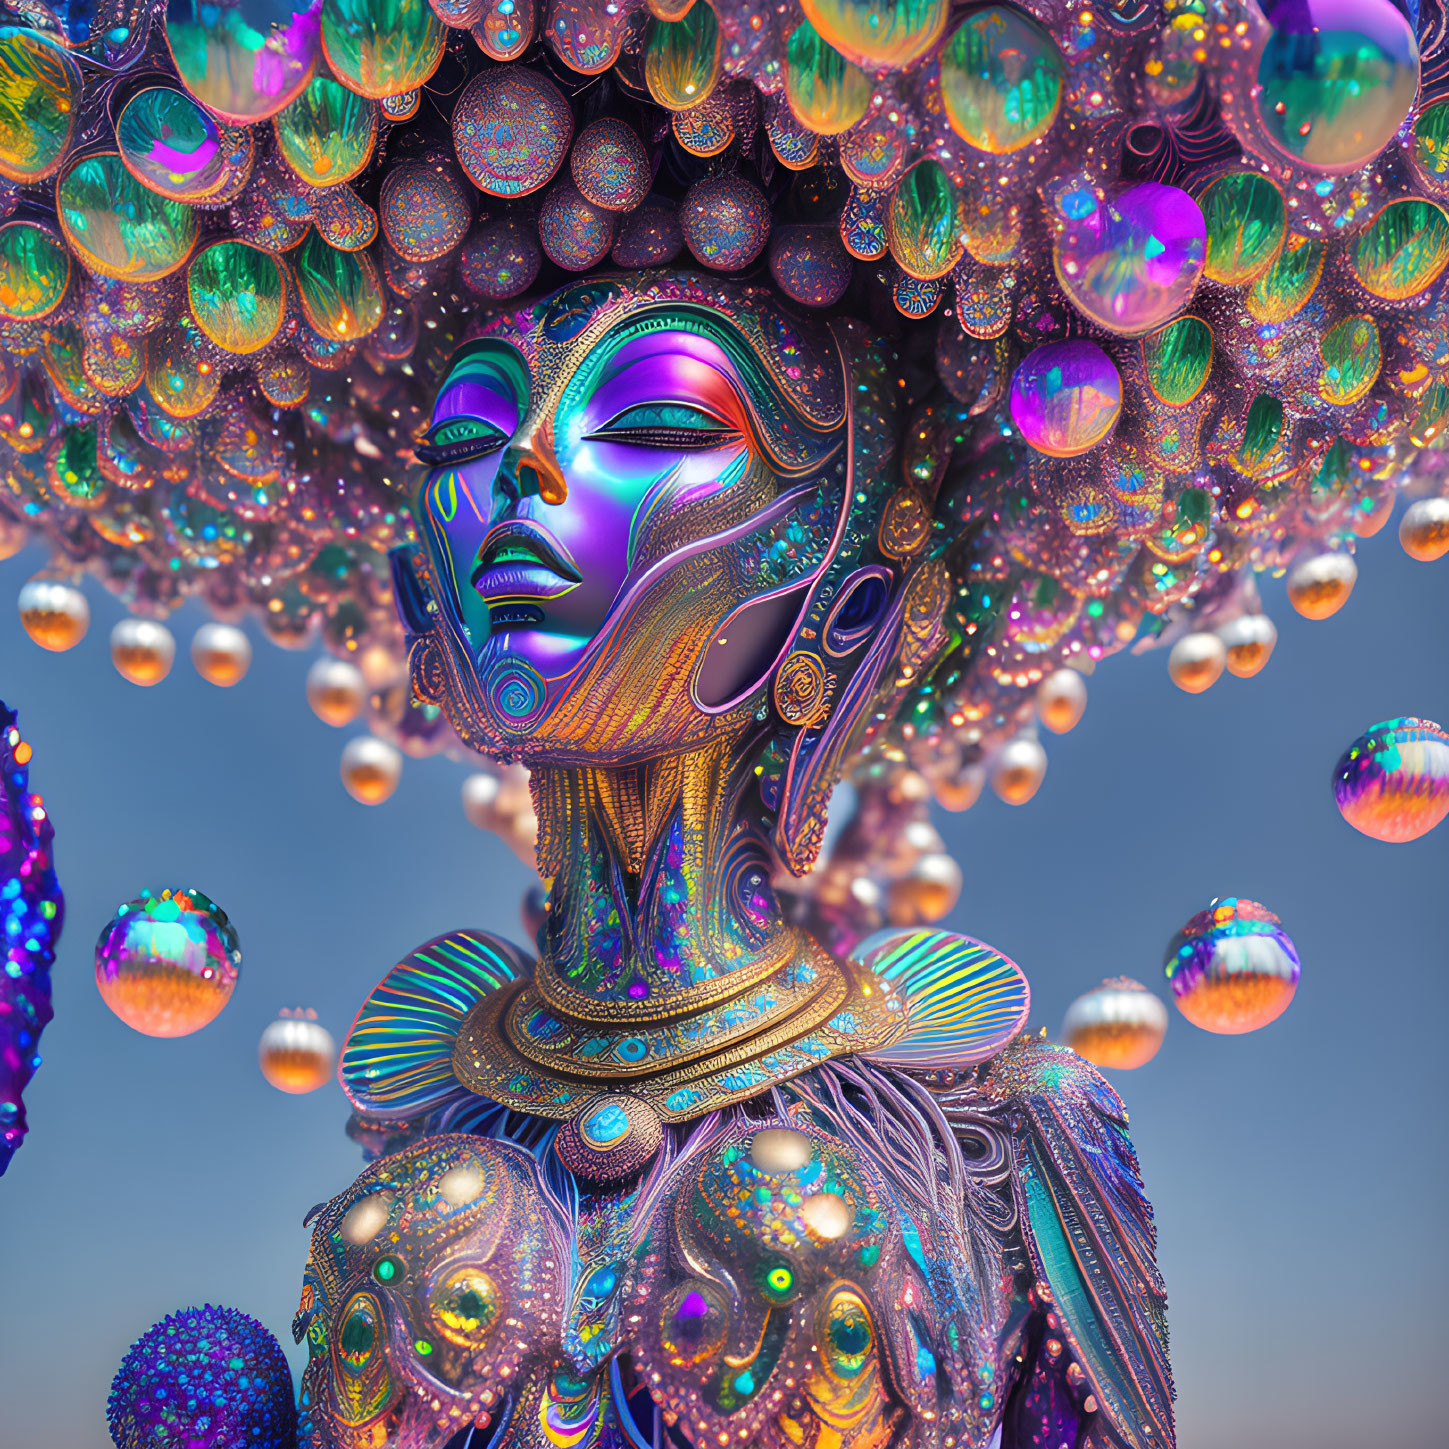 Stylized digital artwork of metallic female figure with orbs on sky-blue background